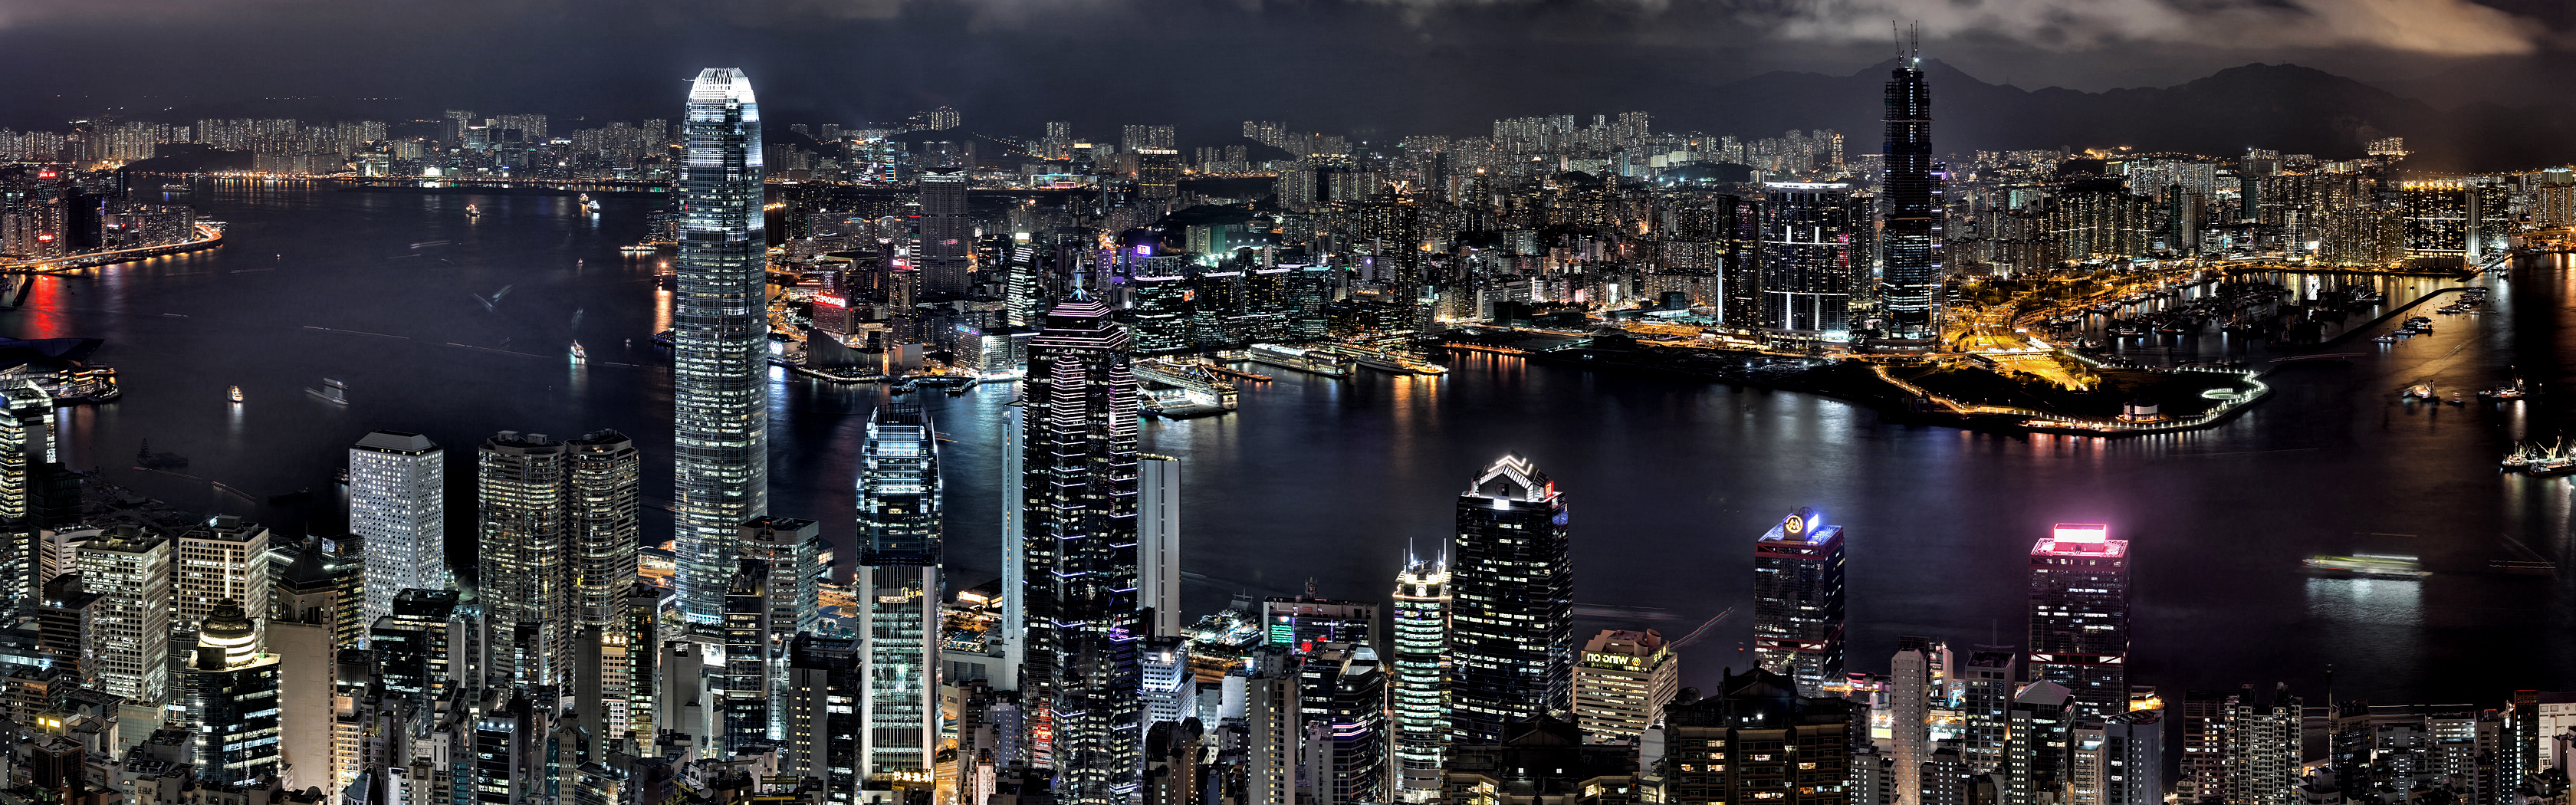 Los mejores fondos de pantalla de Hong Kong para la pantalla del teléfono